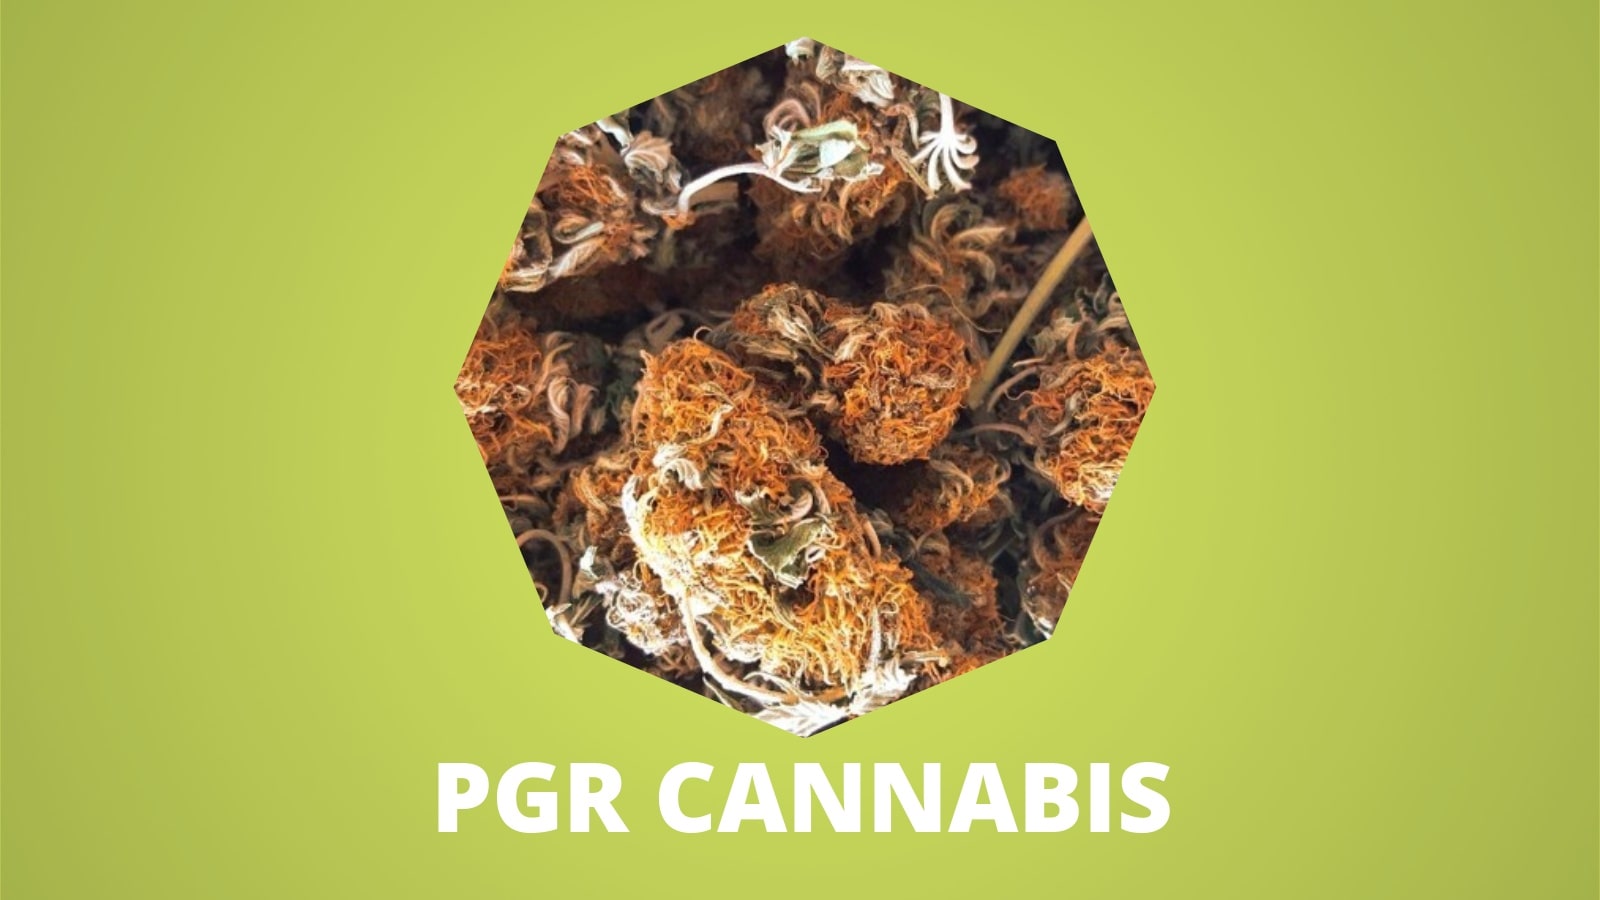 How To Tell PGR Cannabis: Visual Signs Of Toxic Marijuana